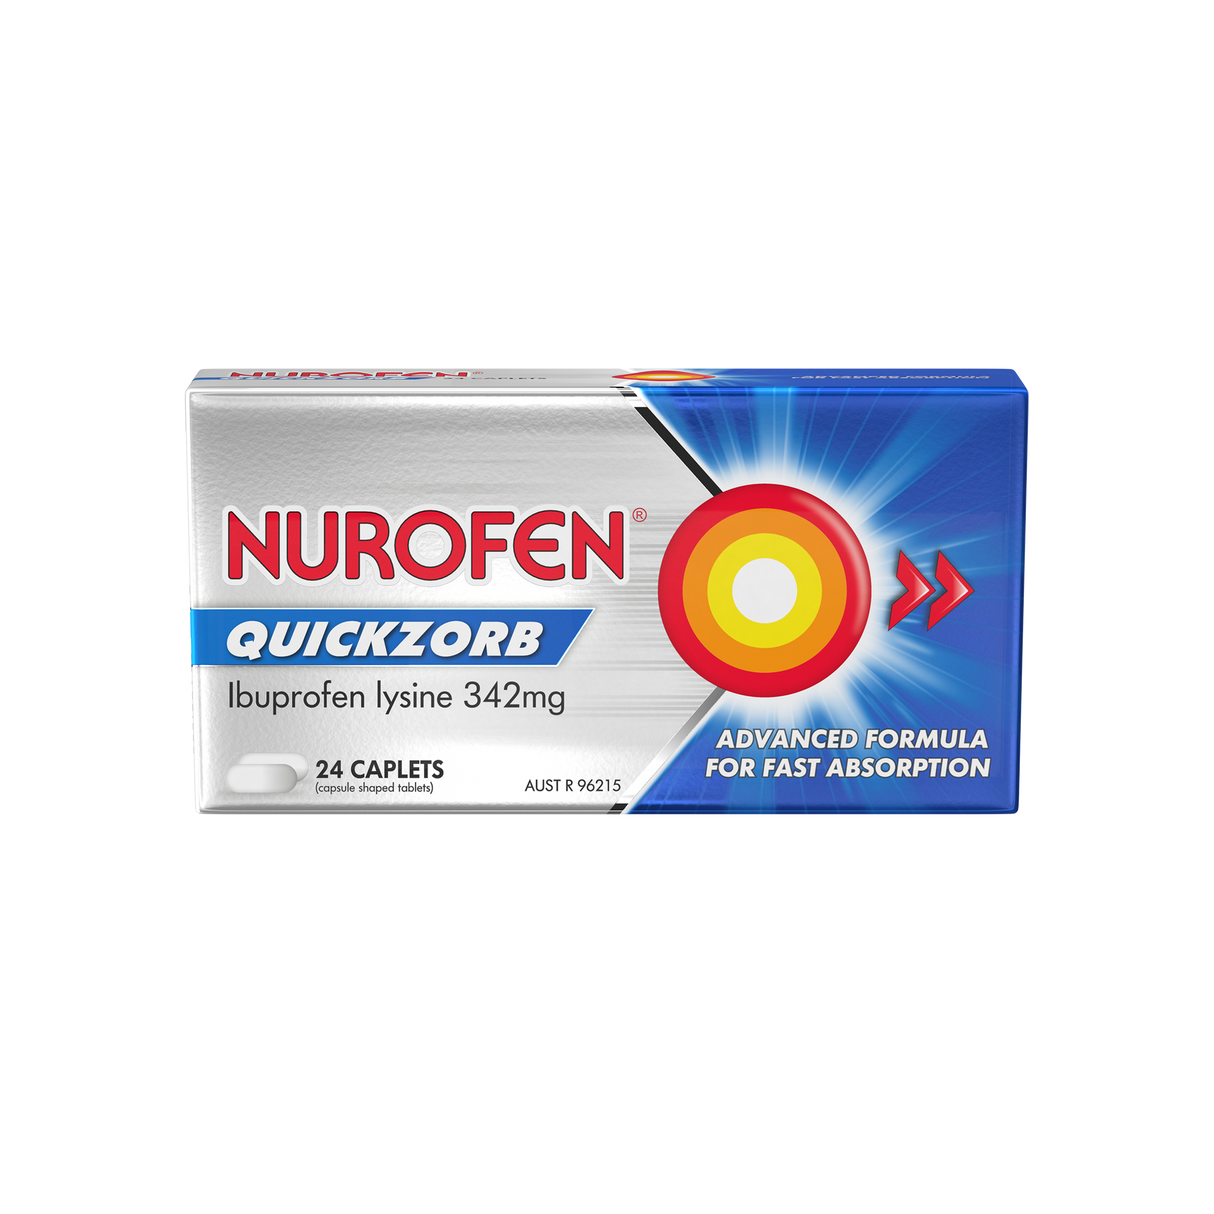 Nurofen Quickzorb Ibuprofen Lysine Caplets 342mg 24 Pack